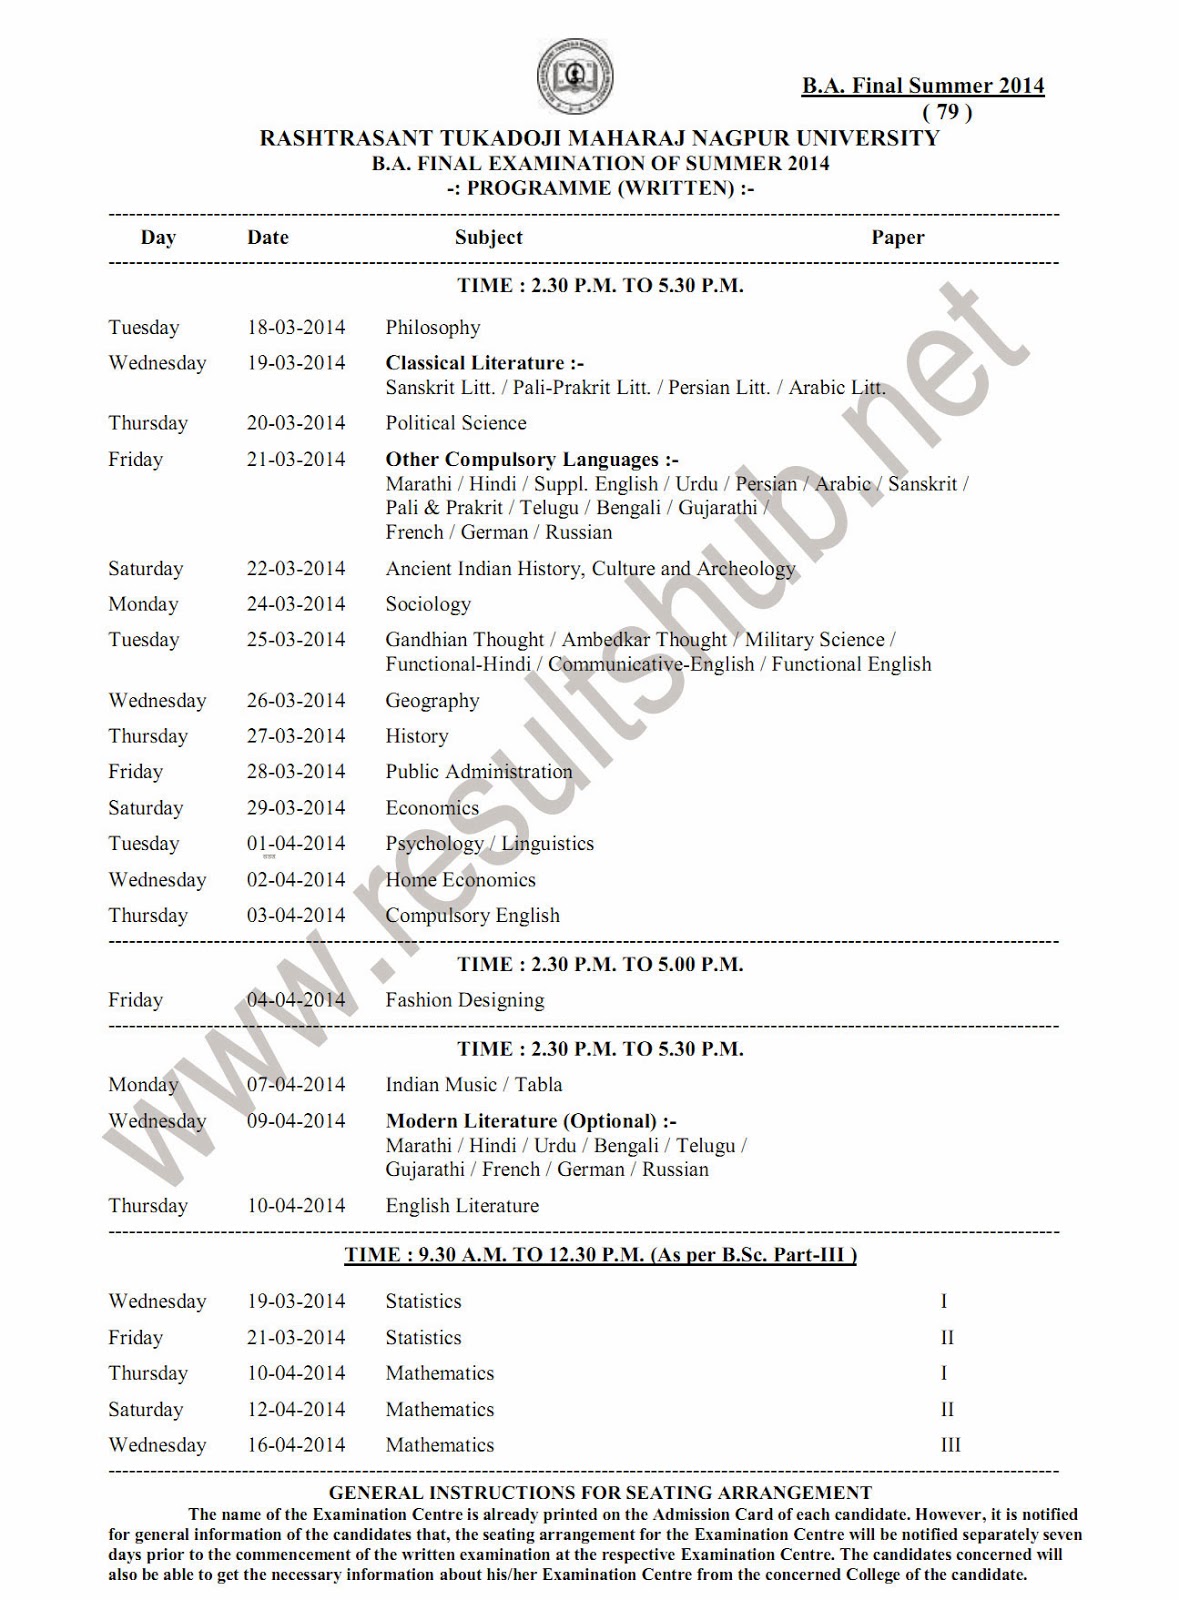 Nagpur University BA Final Summer 2014 Timetable